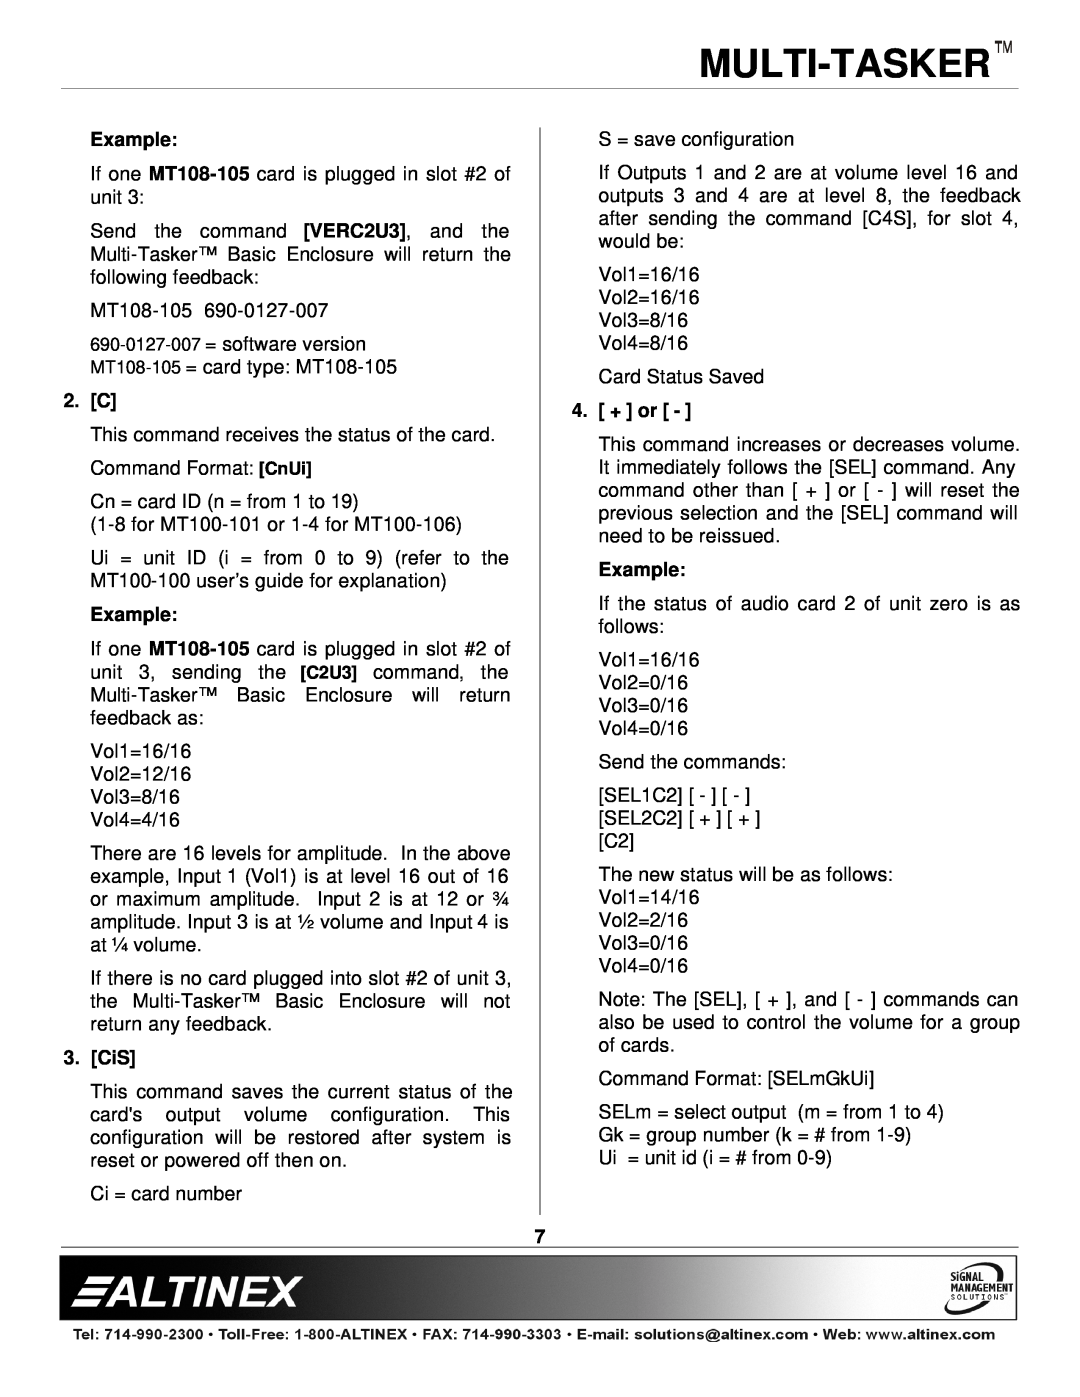 Altinex MT108-104, MT108-105 manual 2. C, CiS, 4. + or, Multi-Tasker, Example 